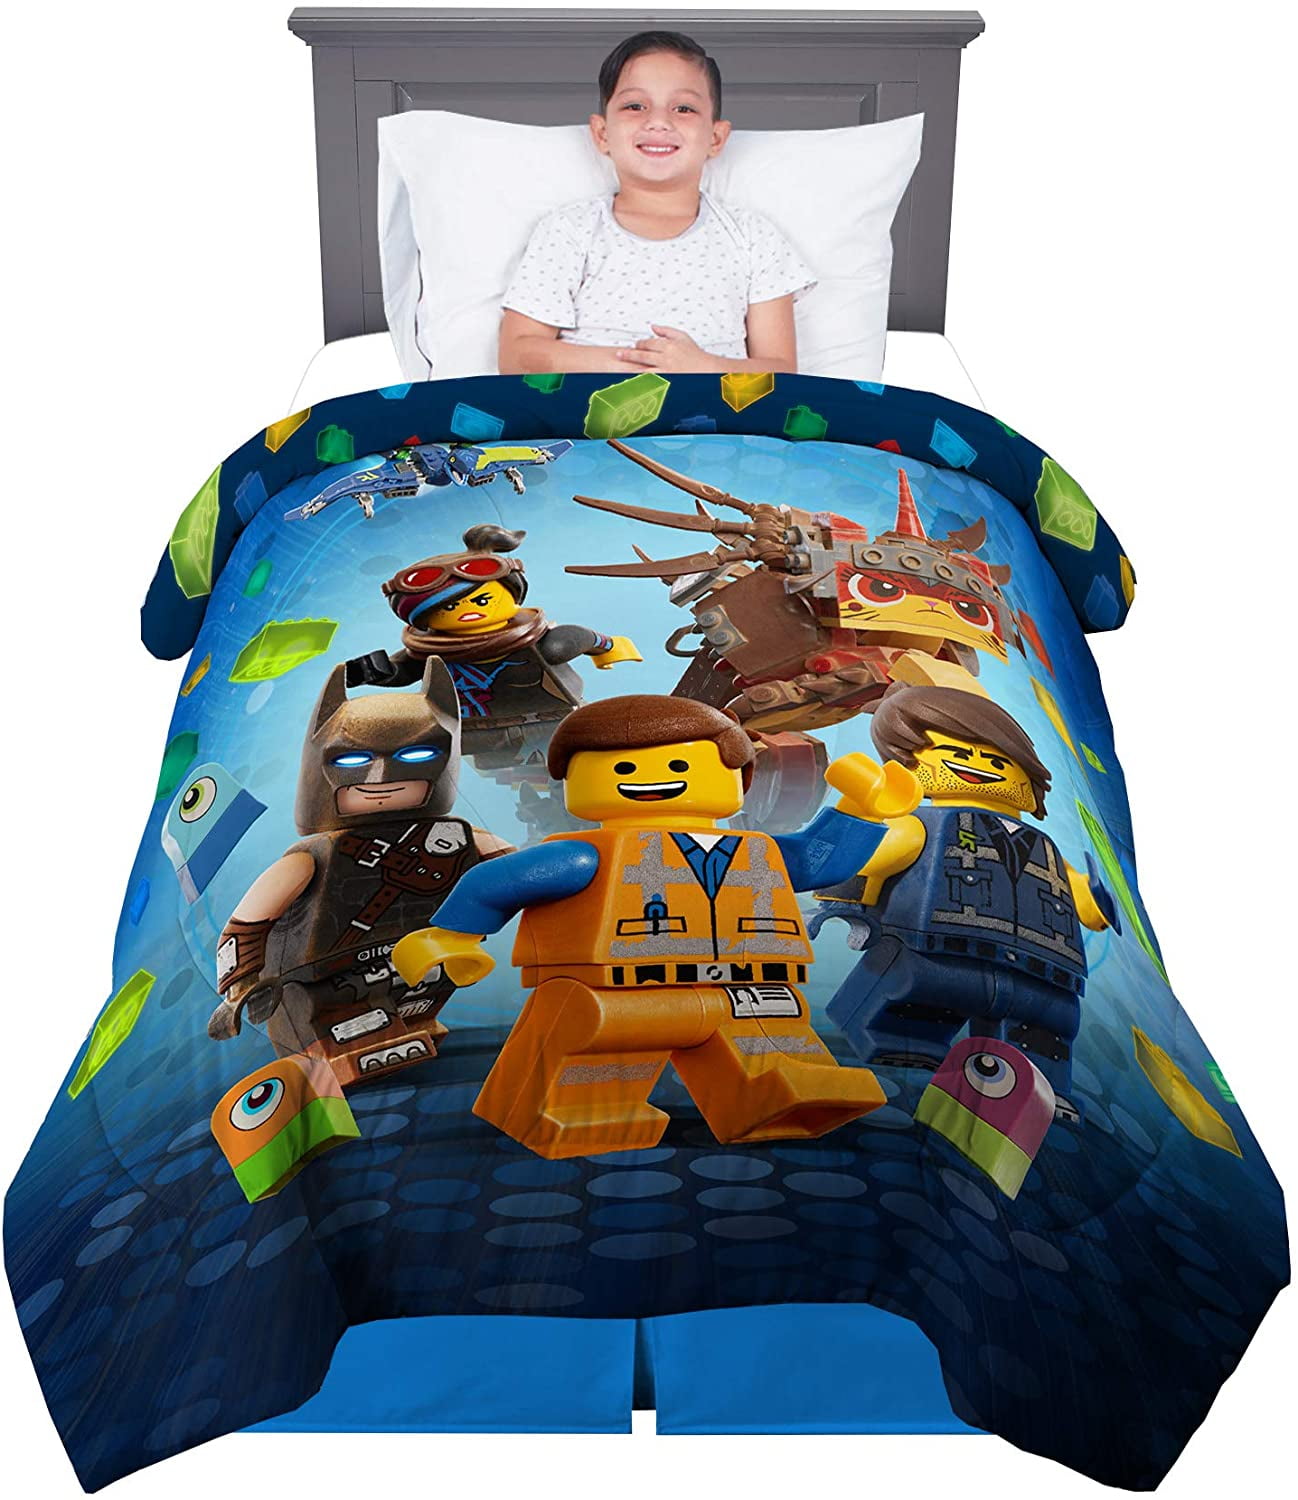 LEGO Movie 2 Kids Bedding Soft Microfiber Reversible Comforter Twin/Full Size 72” x 86” Blue 